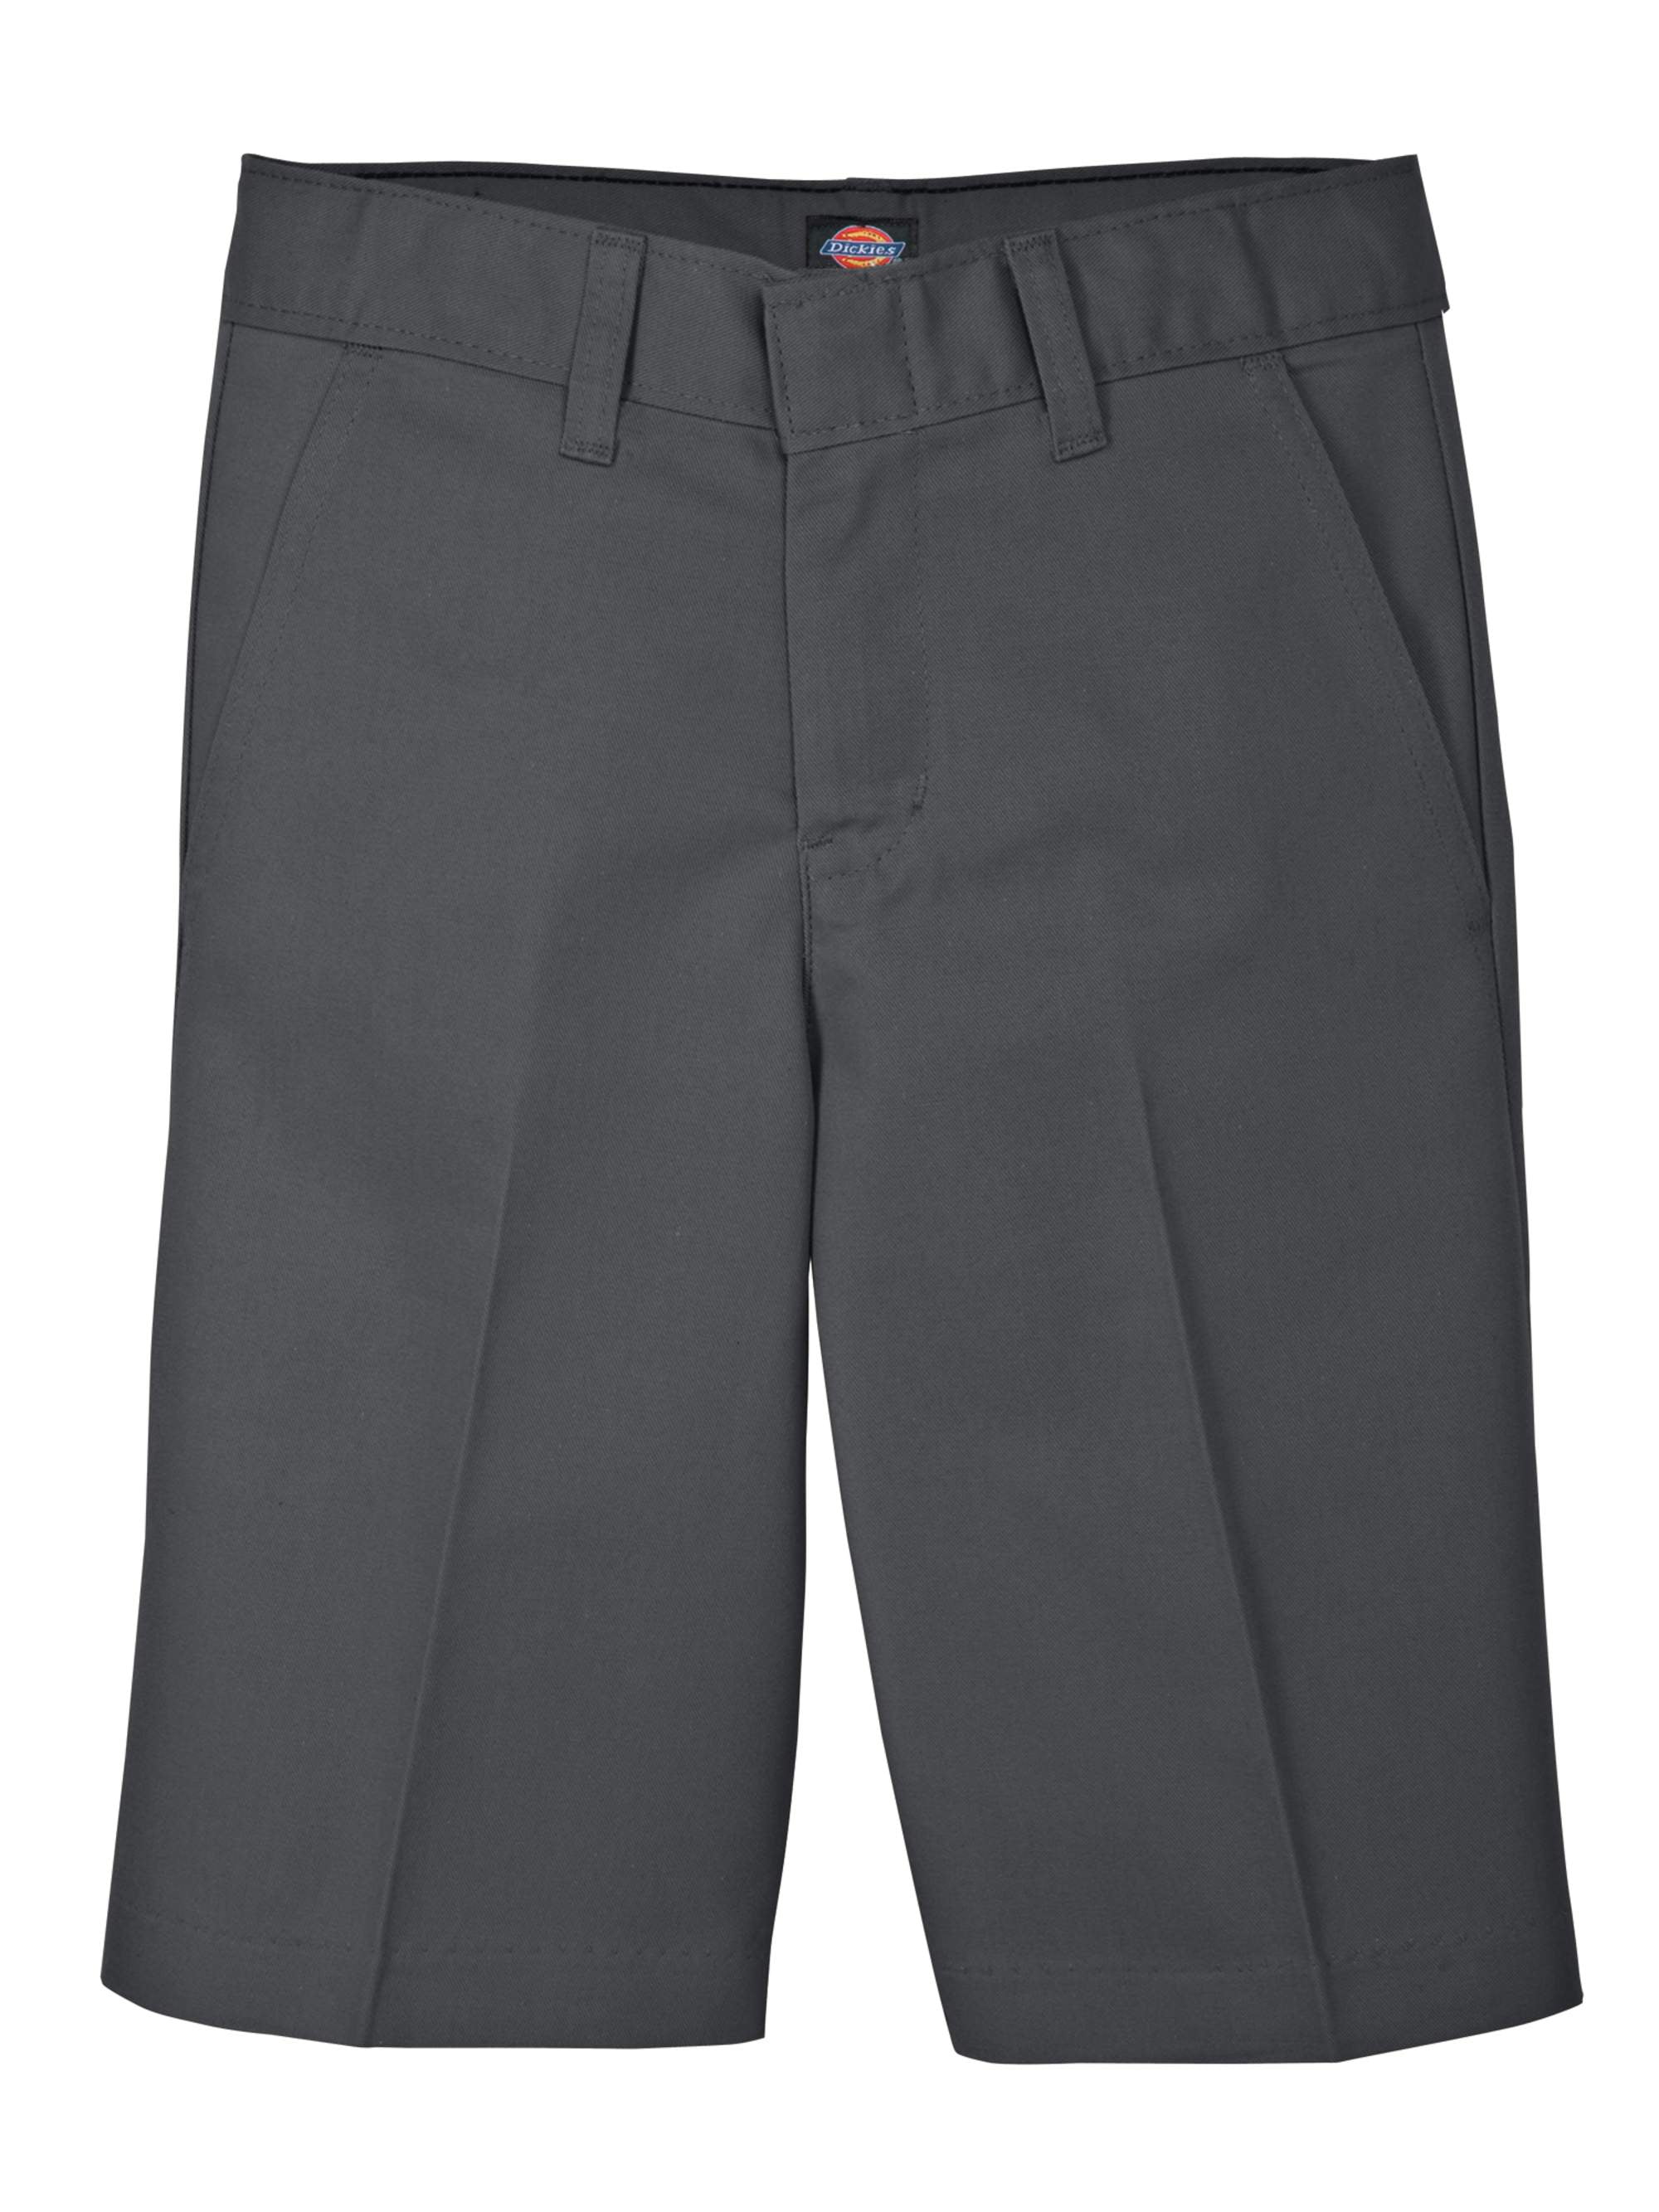 Boys Navy Pants Genuine Flat Front School Uniforms Sizes 4 to 20 